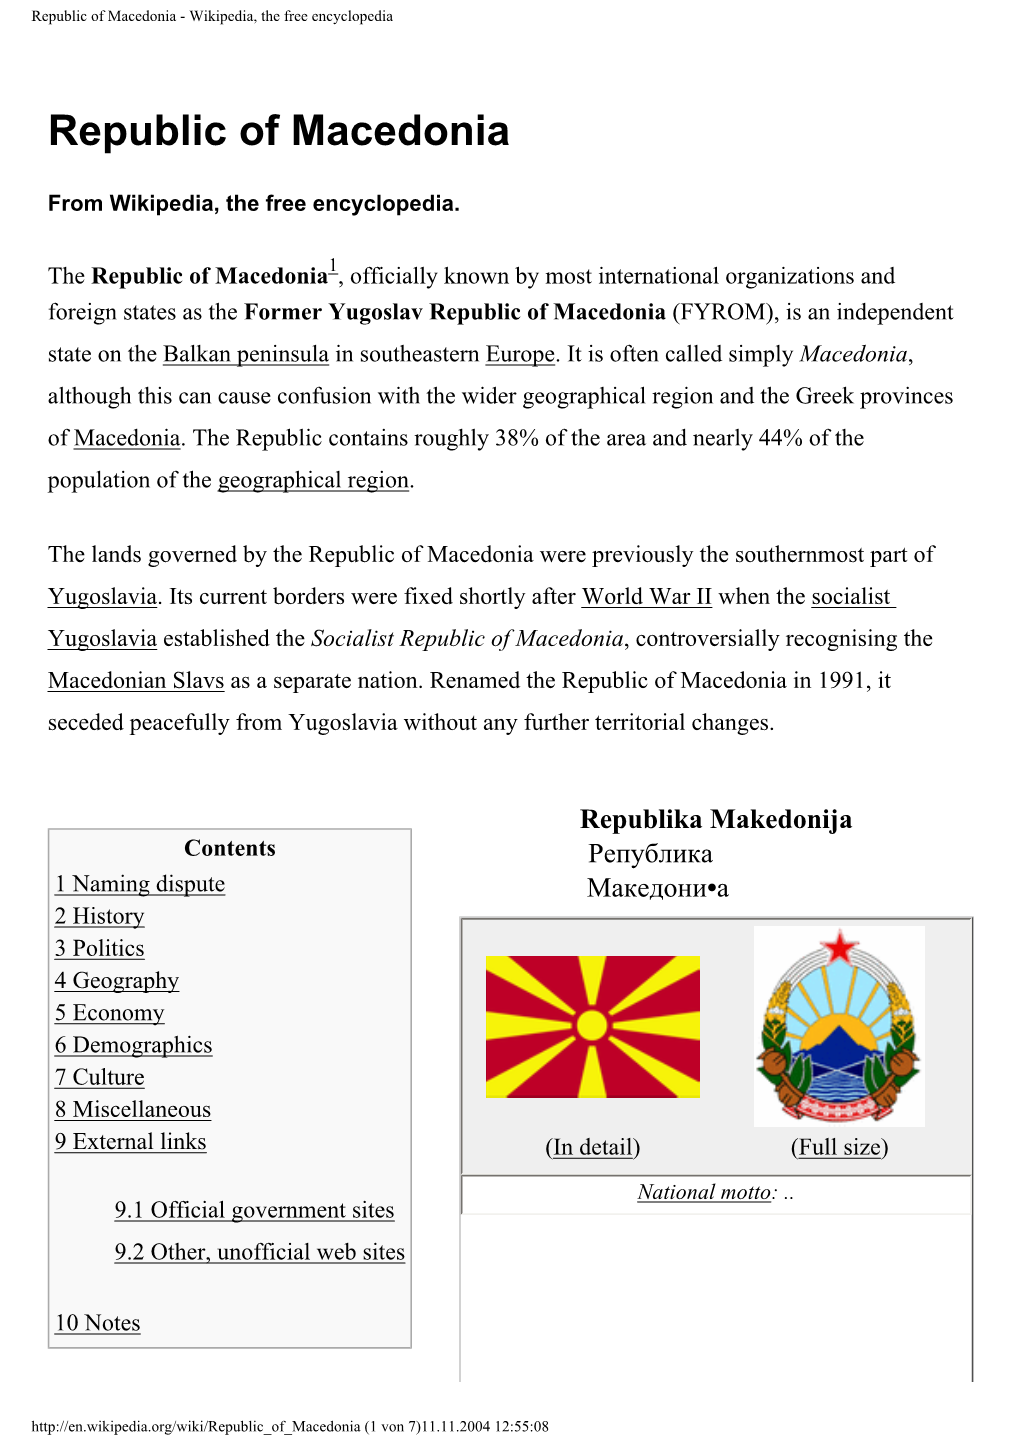 Republic of Macedonia - Wikipedia, the Free Encyclopedia